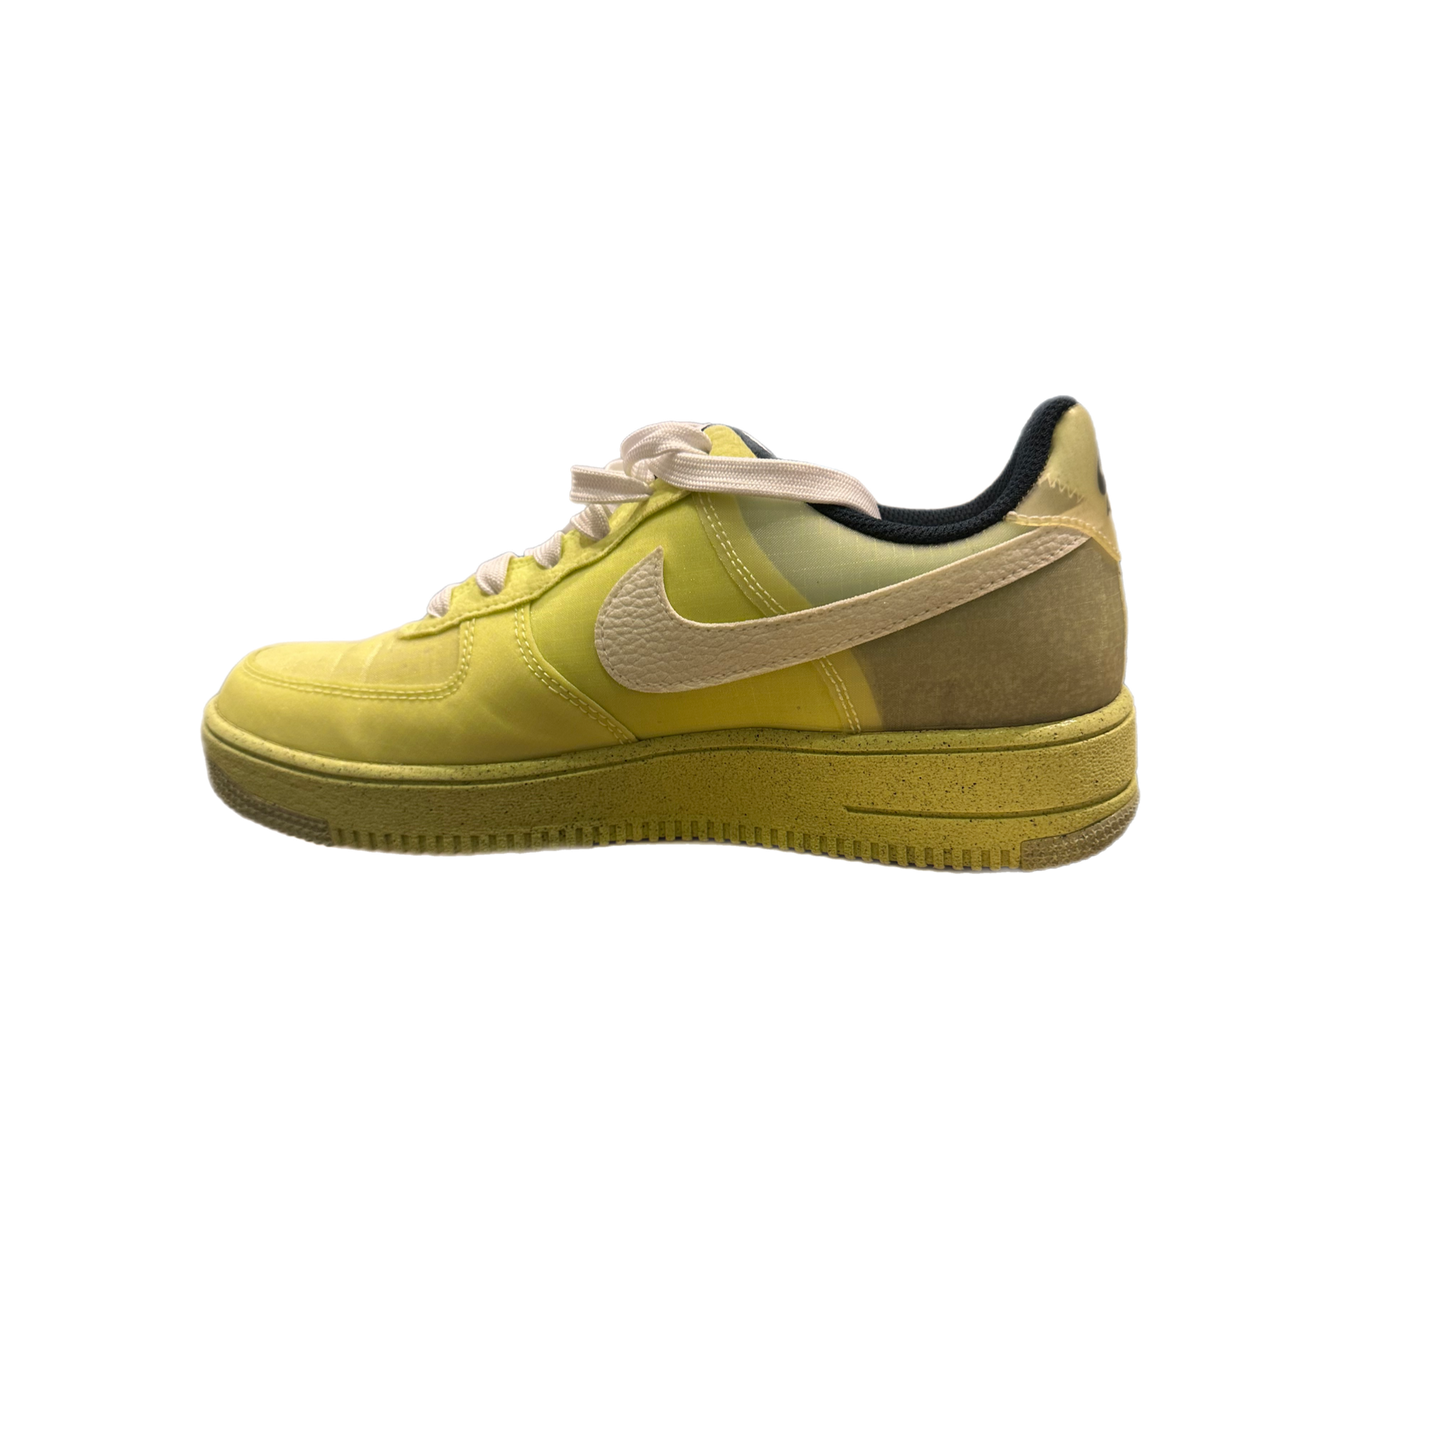 Nike - "Air Force 1 Crater Lemon Twist" - Size 7